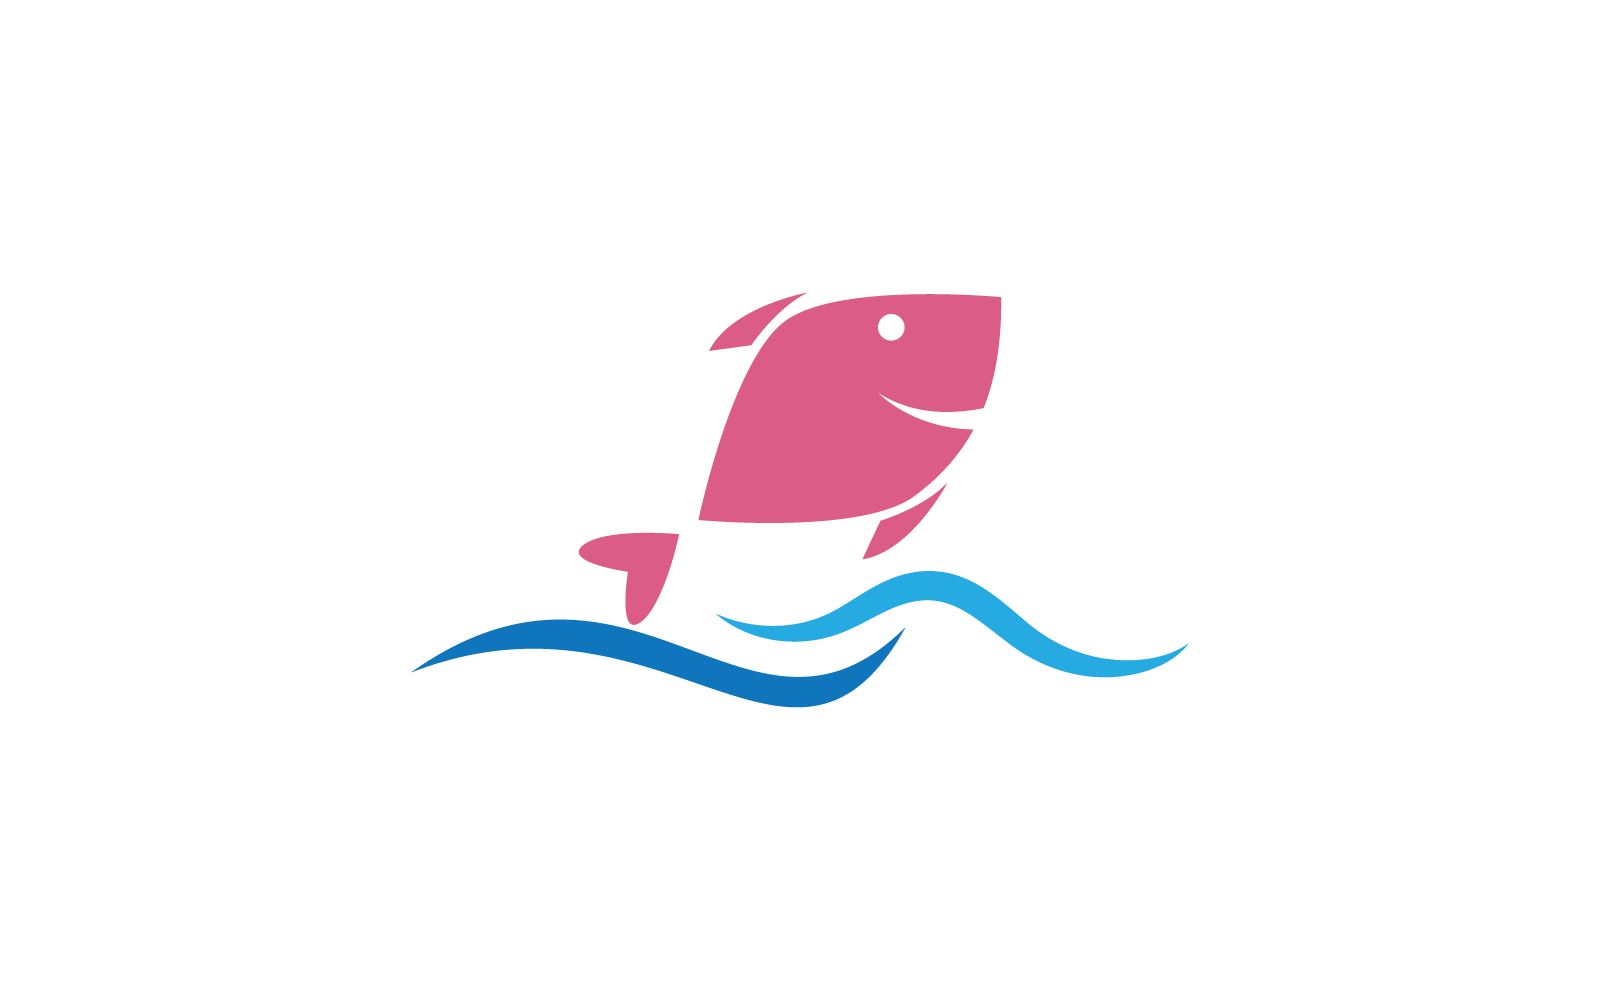 Fish ilustration logo vector logo template